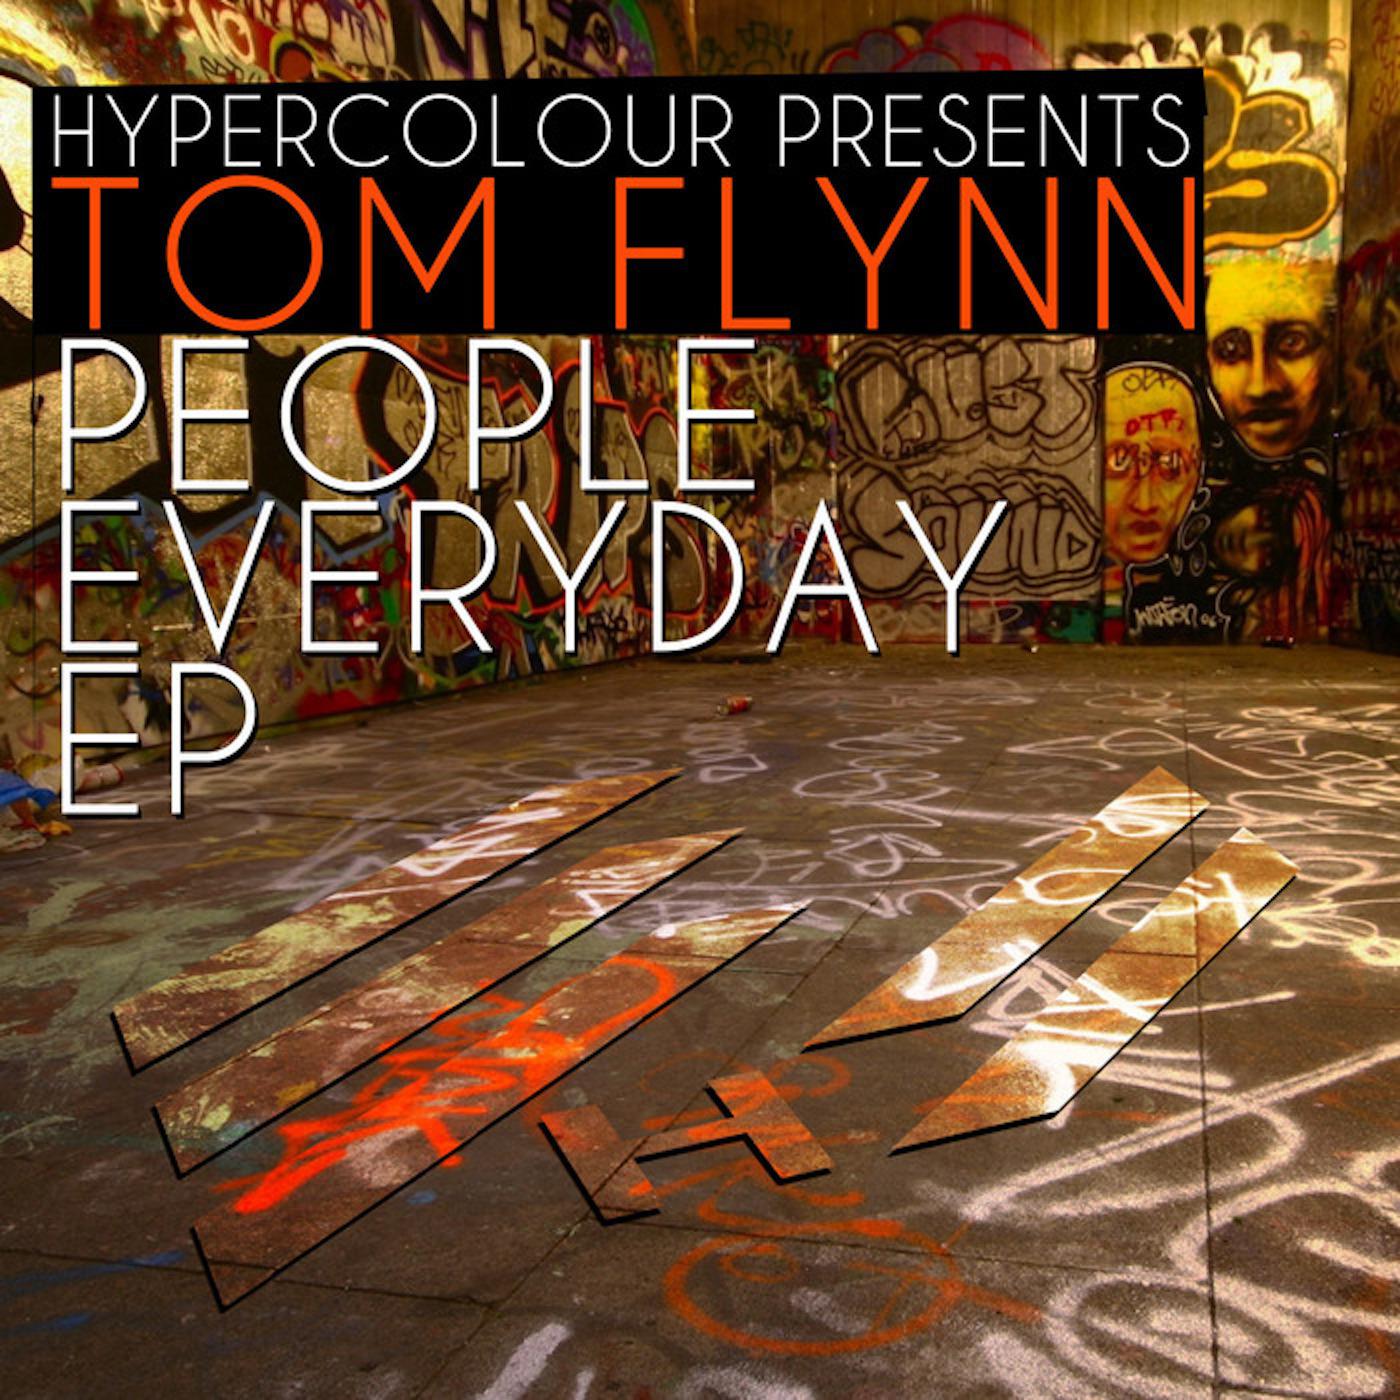 People Everyday (Original Mix)